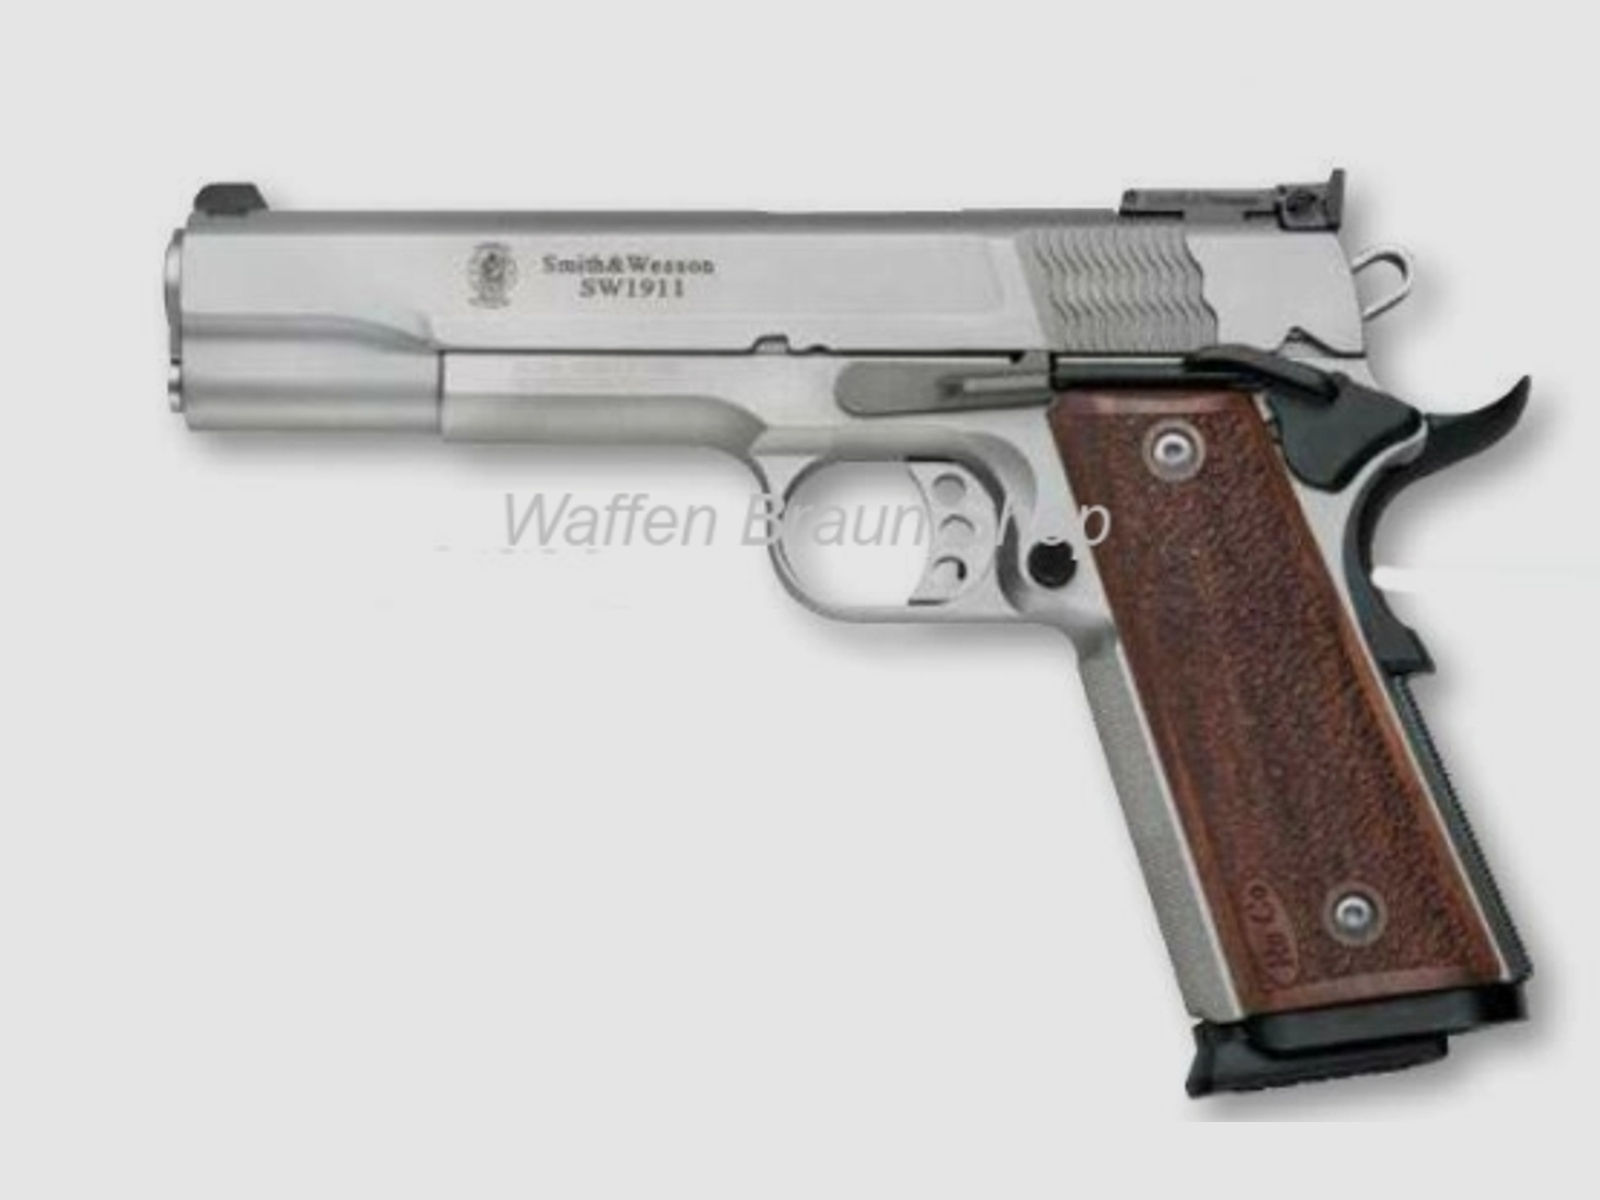 S&W Pistole Mod. SW1911, 5", AS, Pro Series, cal. 9mm Luger, verstellbare Visierung, 10-Schuss